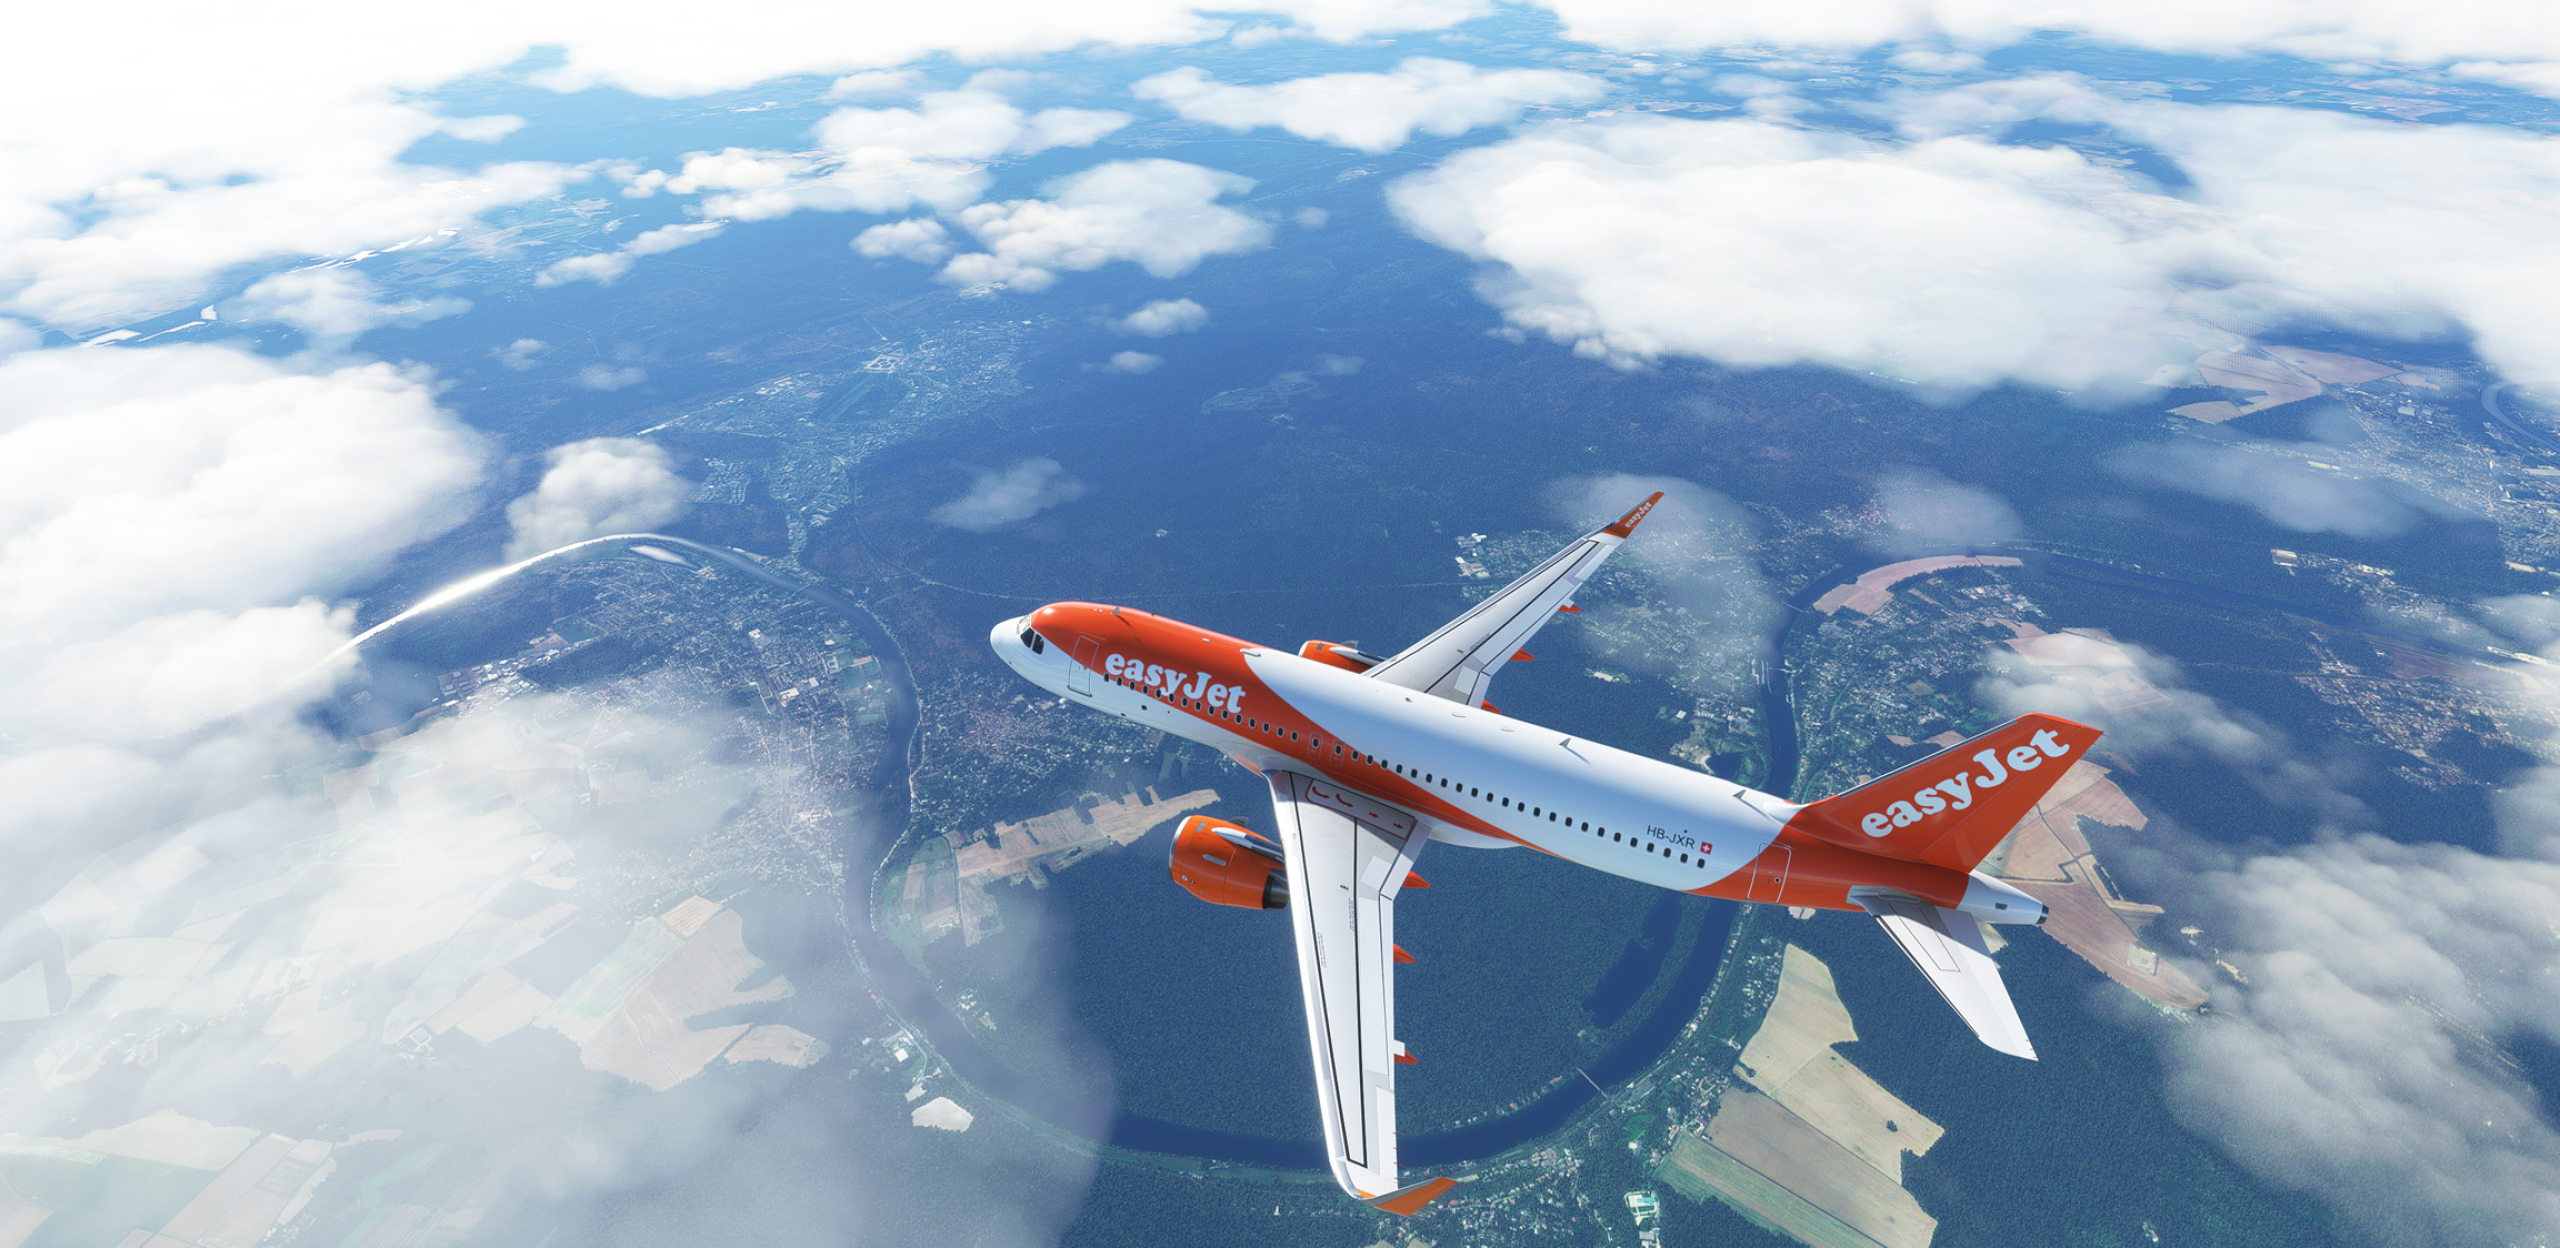 EasyJet Switzerland, AA777-200ERs, Aerosoft community, Flight simulation, 2560x1250 Dual Screen Desktop